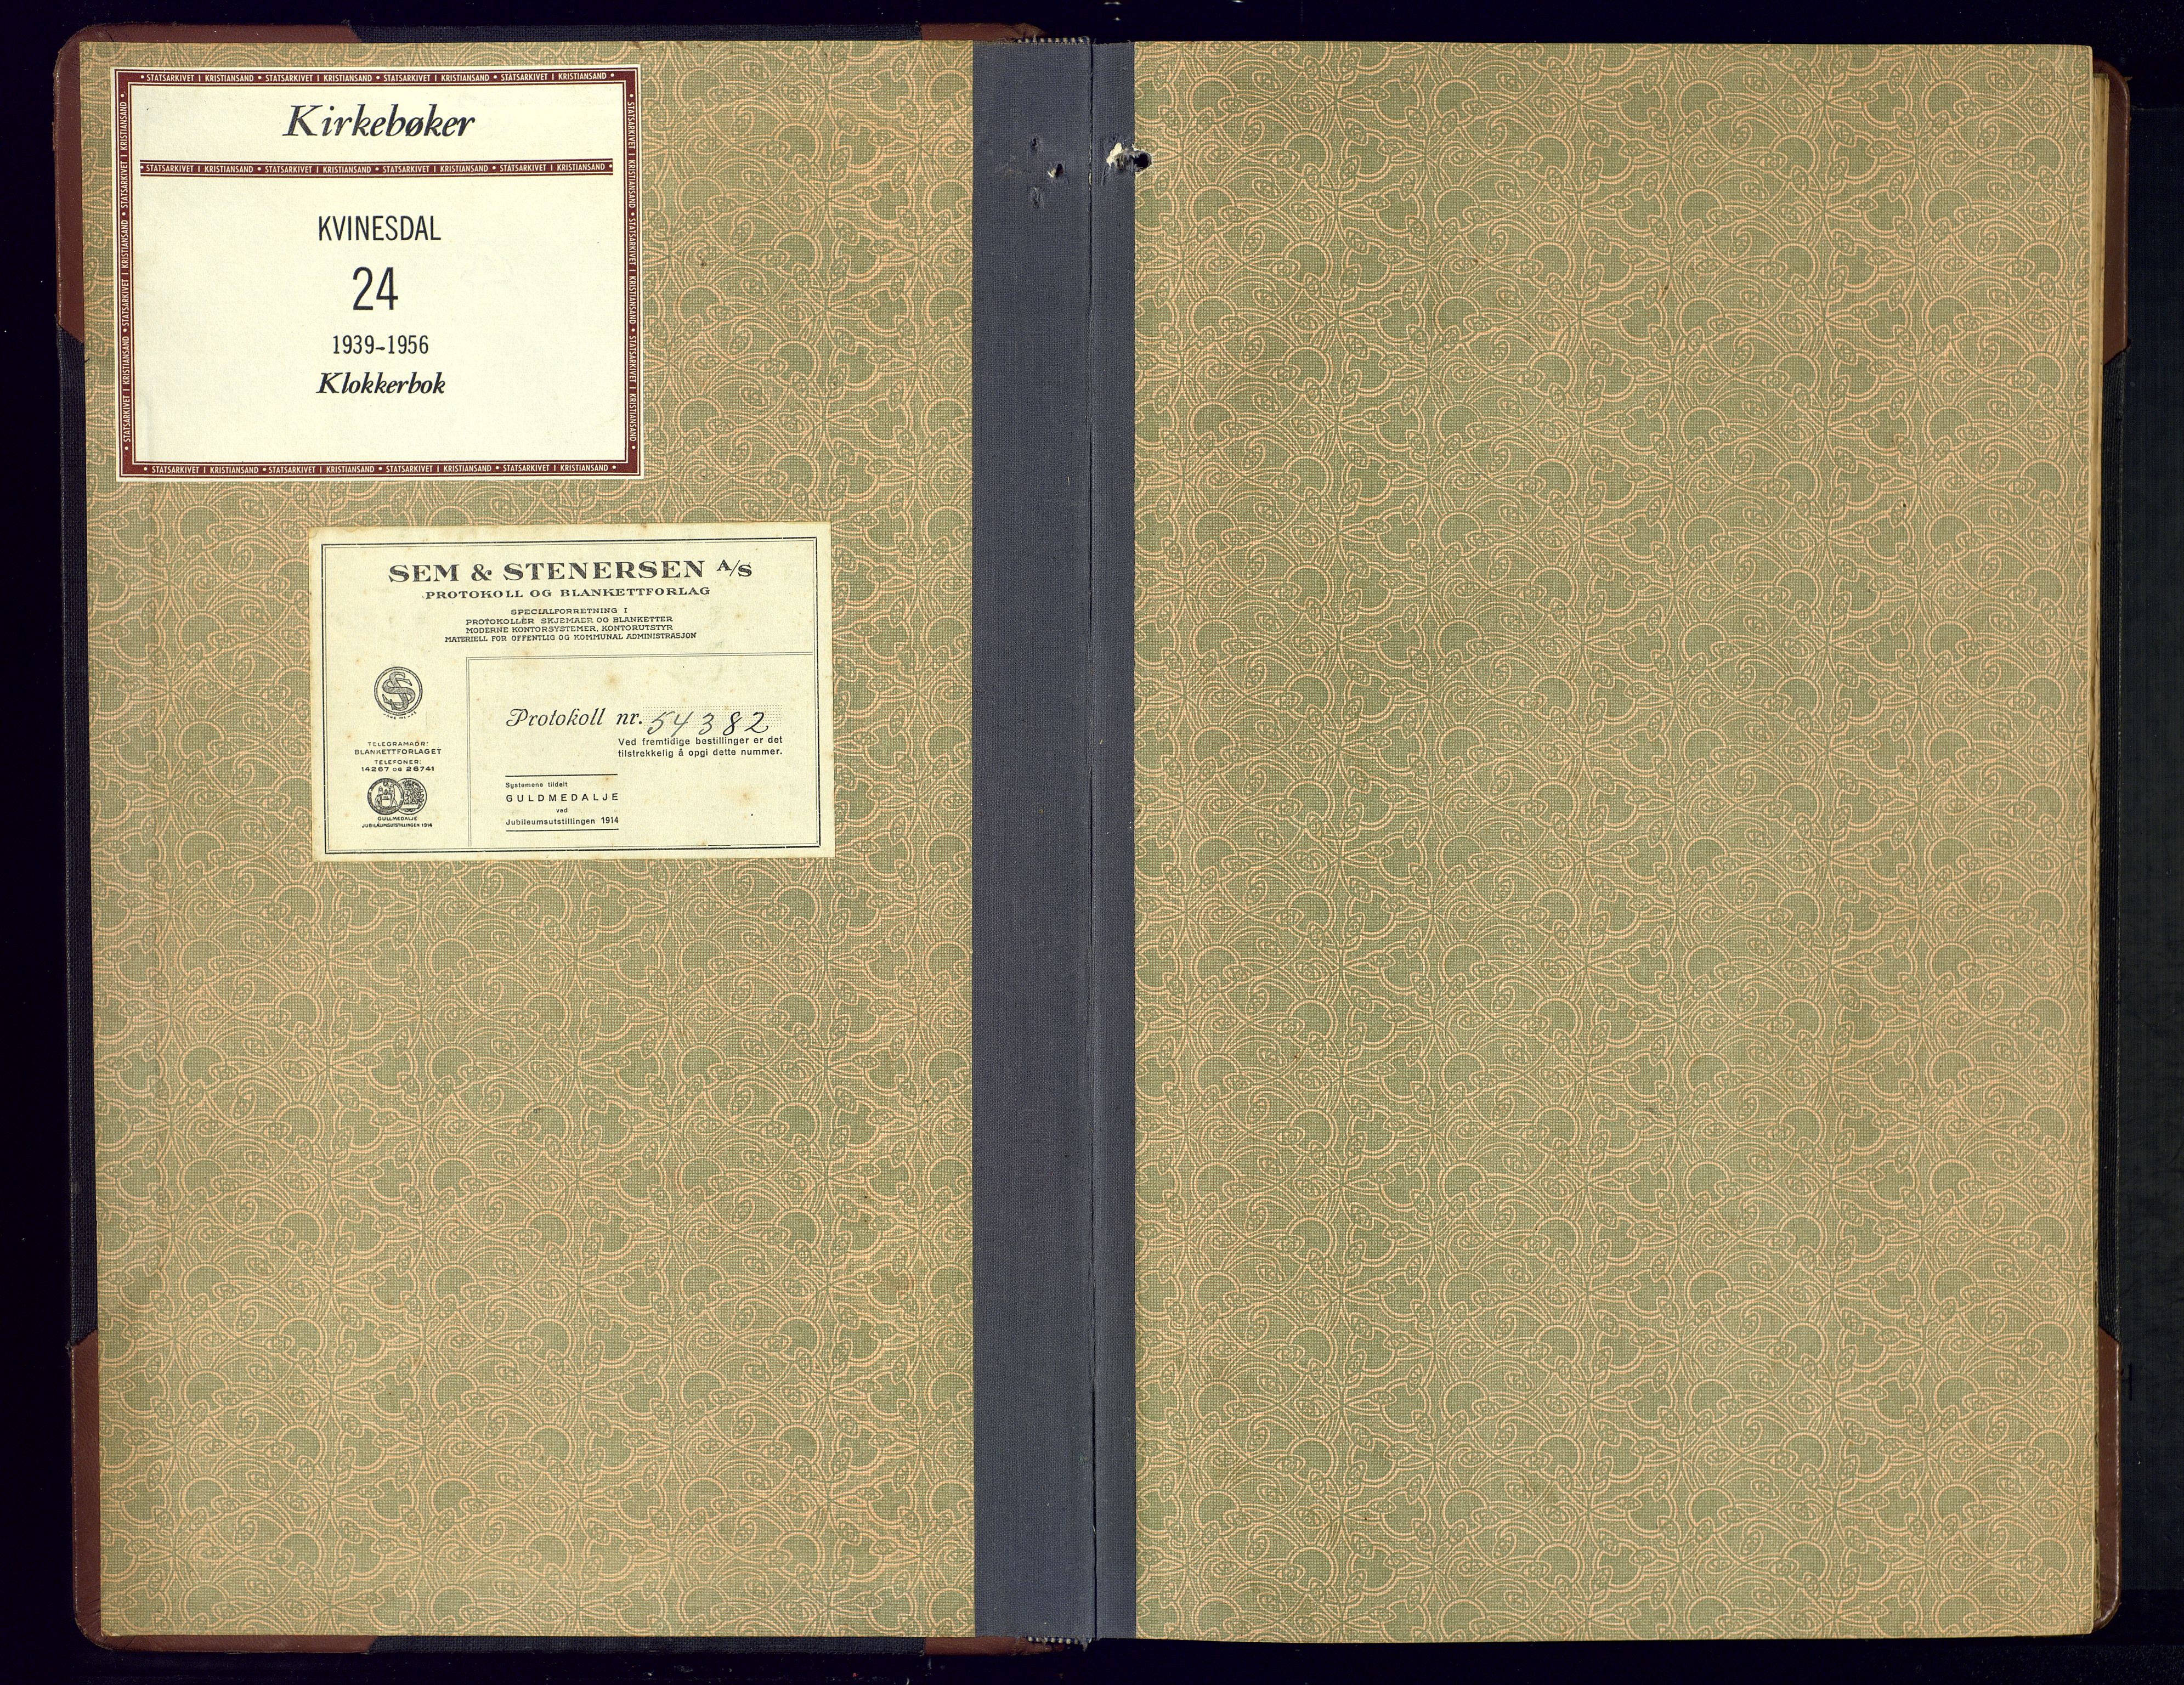 Kvinesdal sokneprestkontor, SAK/1111-0026/F/Fb/Fbb/L0005: Klokkerbok nr. B 5, 1939-1956